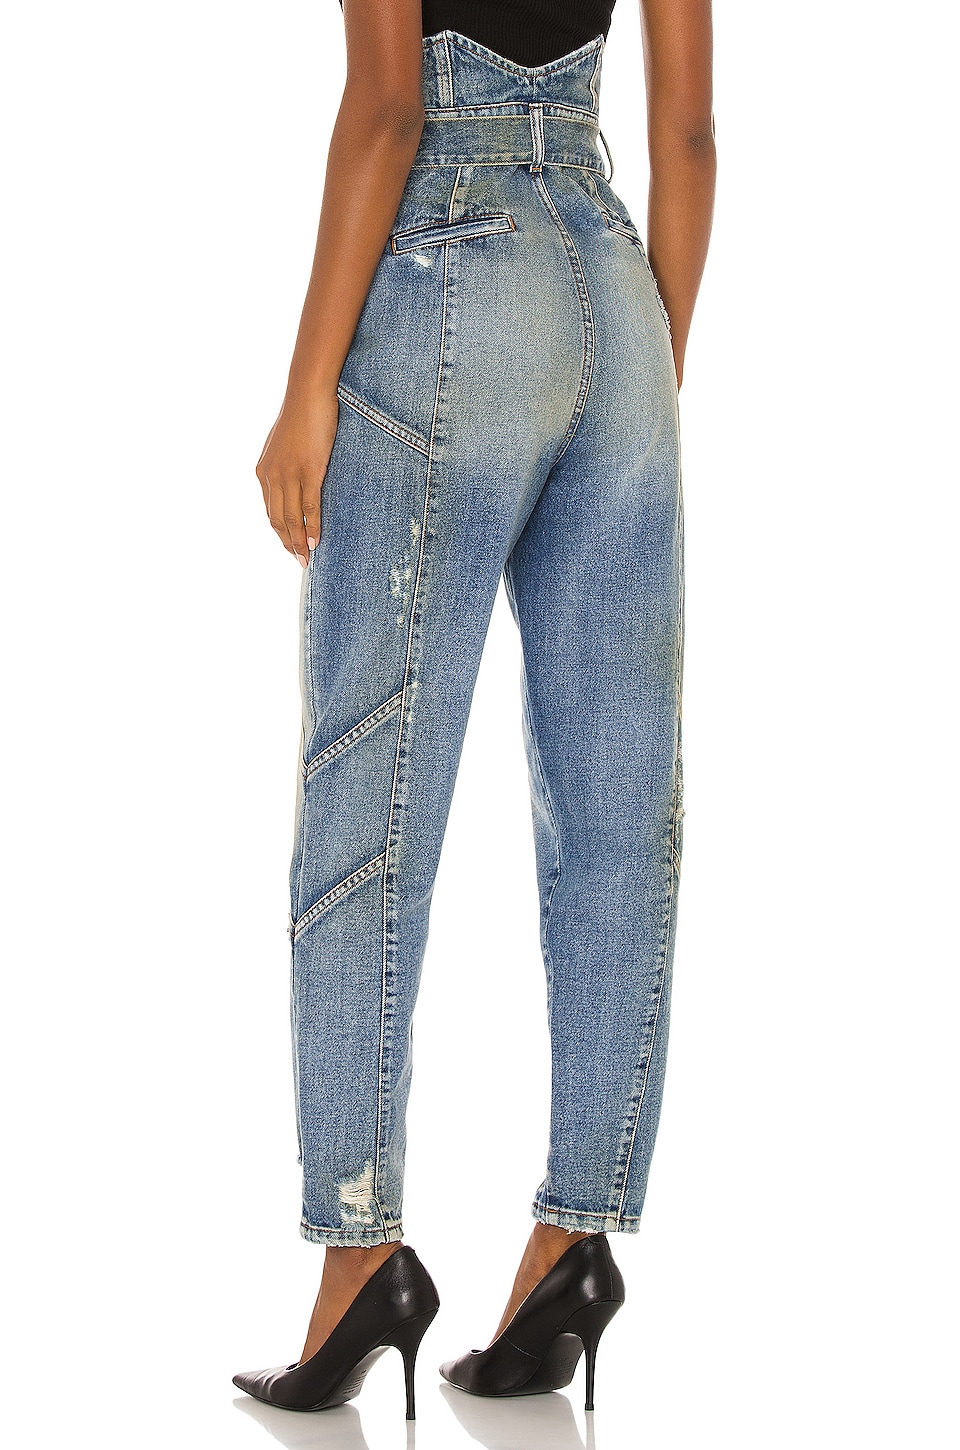 retrofete Tiana Jeans in Zephyr | REVOLVE